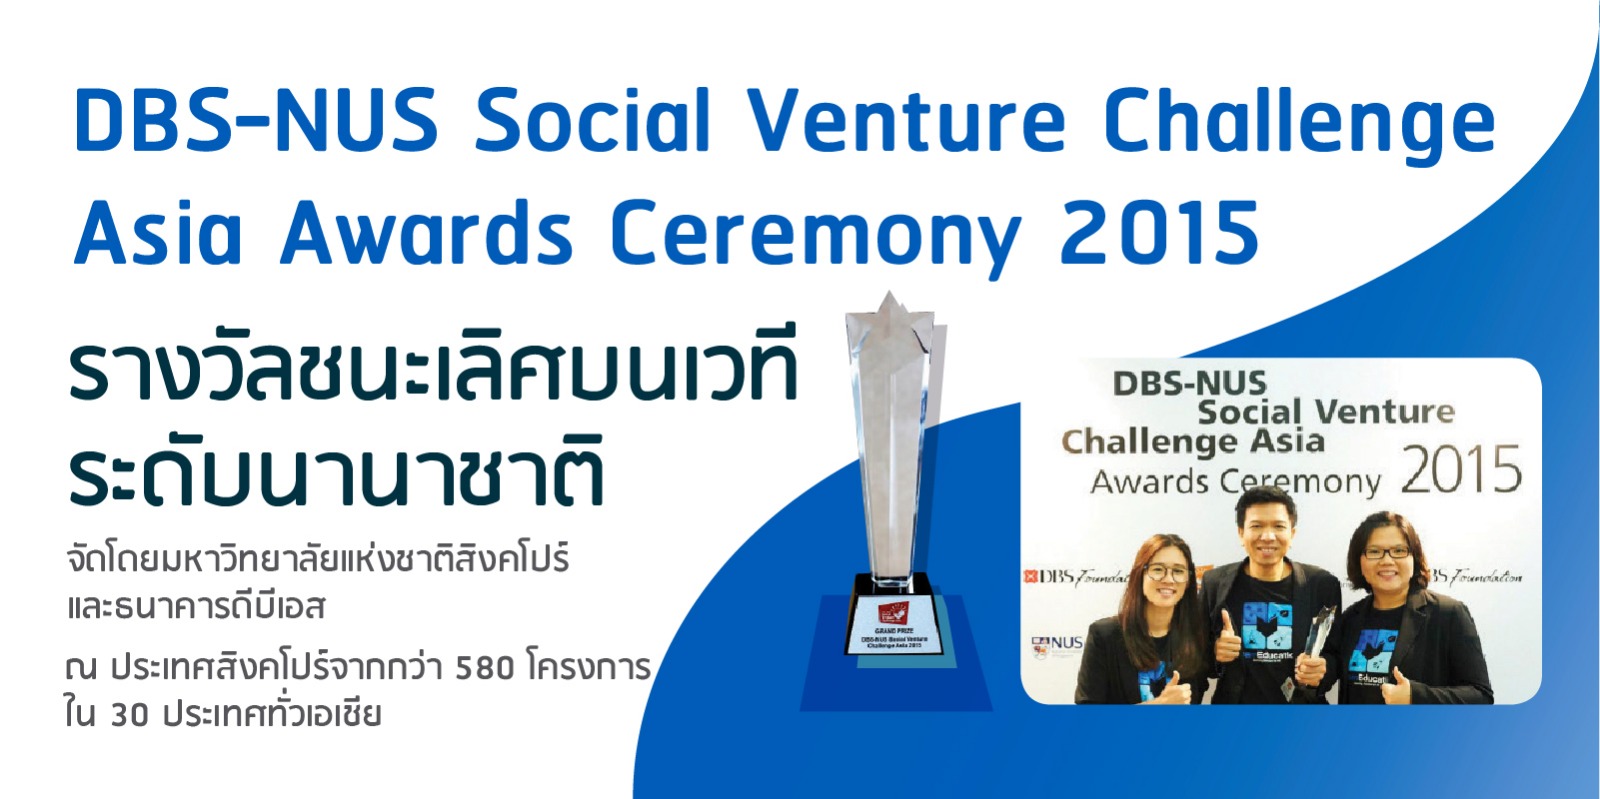 DBS-NUS Social Venture Challenge Asia Awards Ceremony 2015